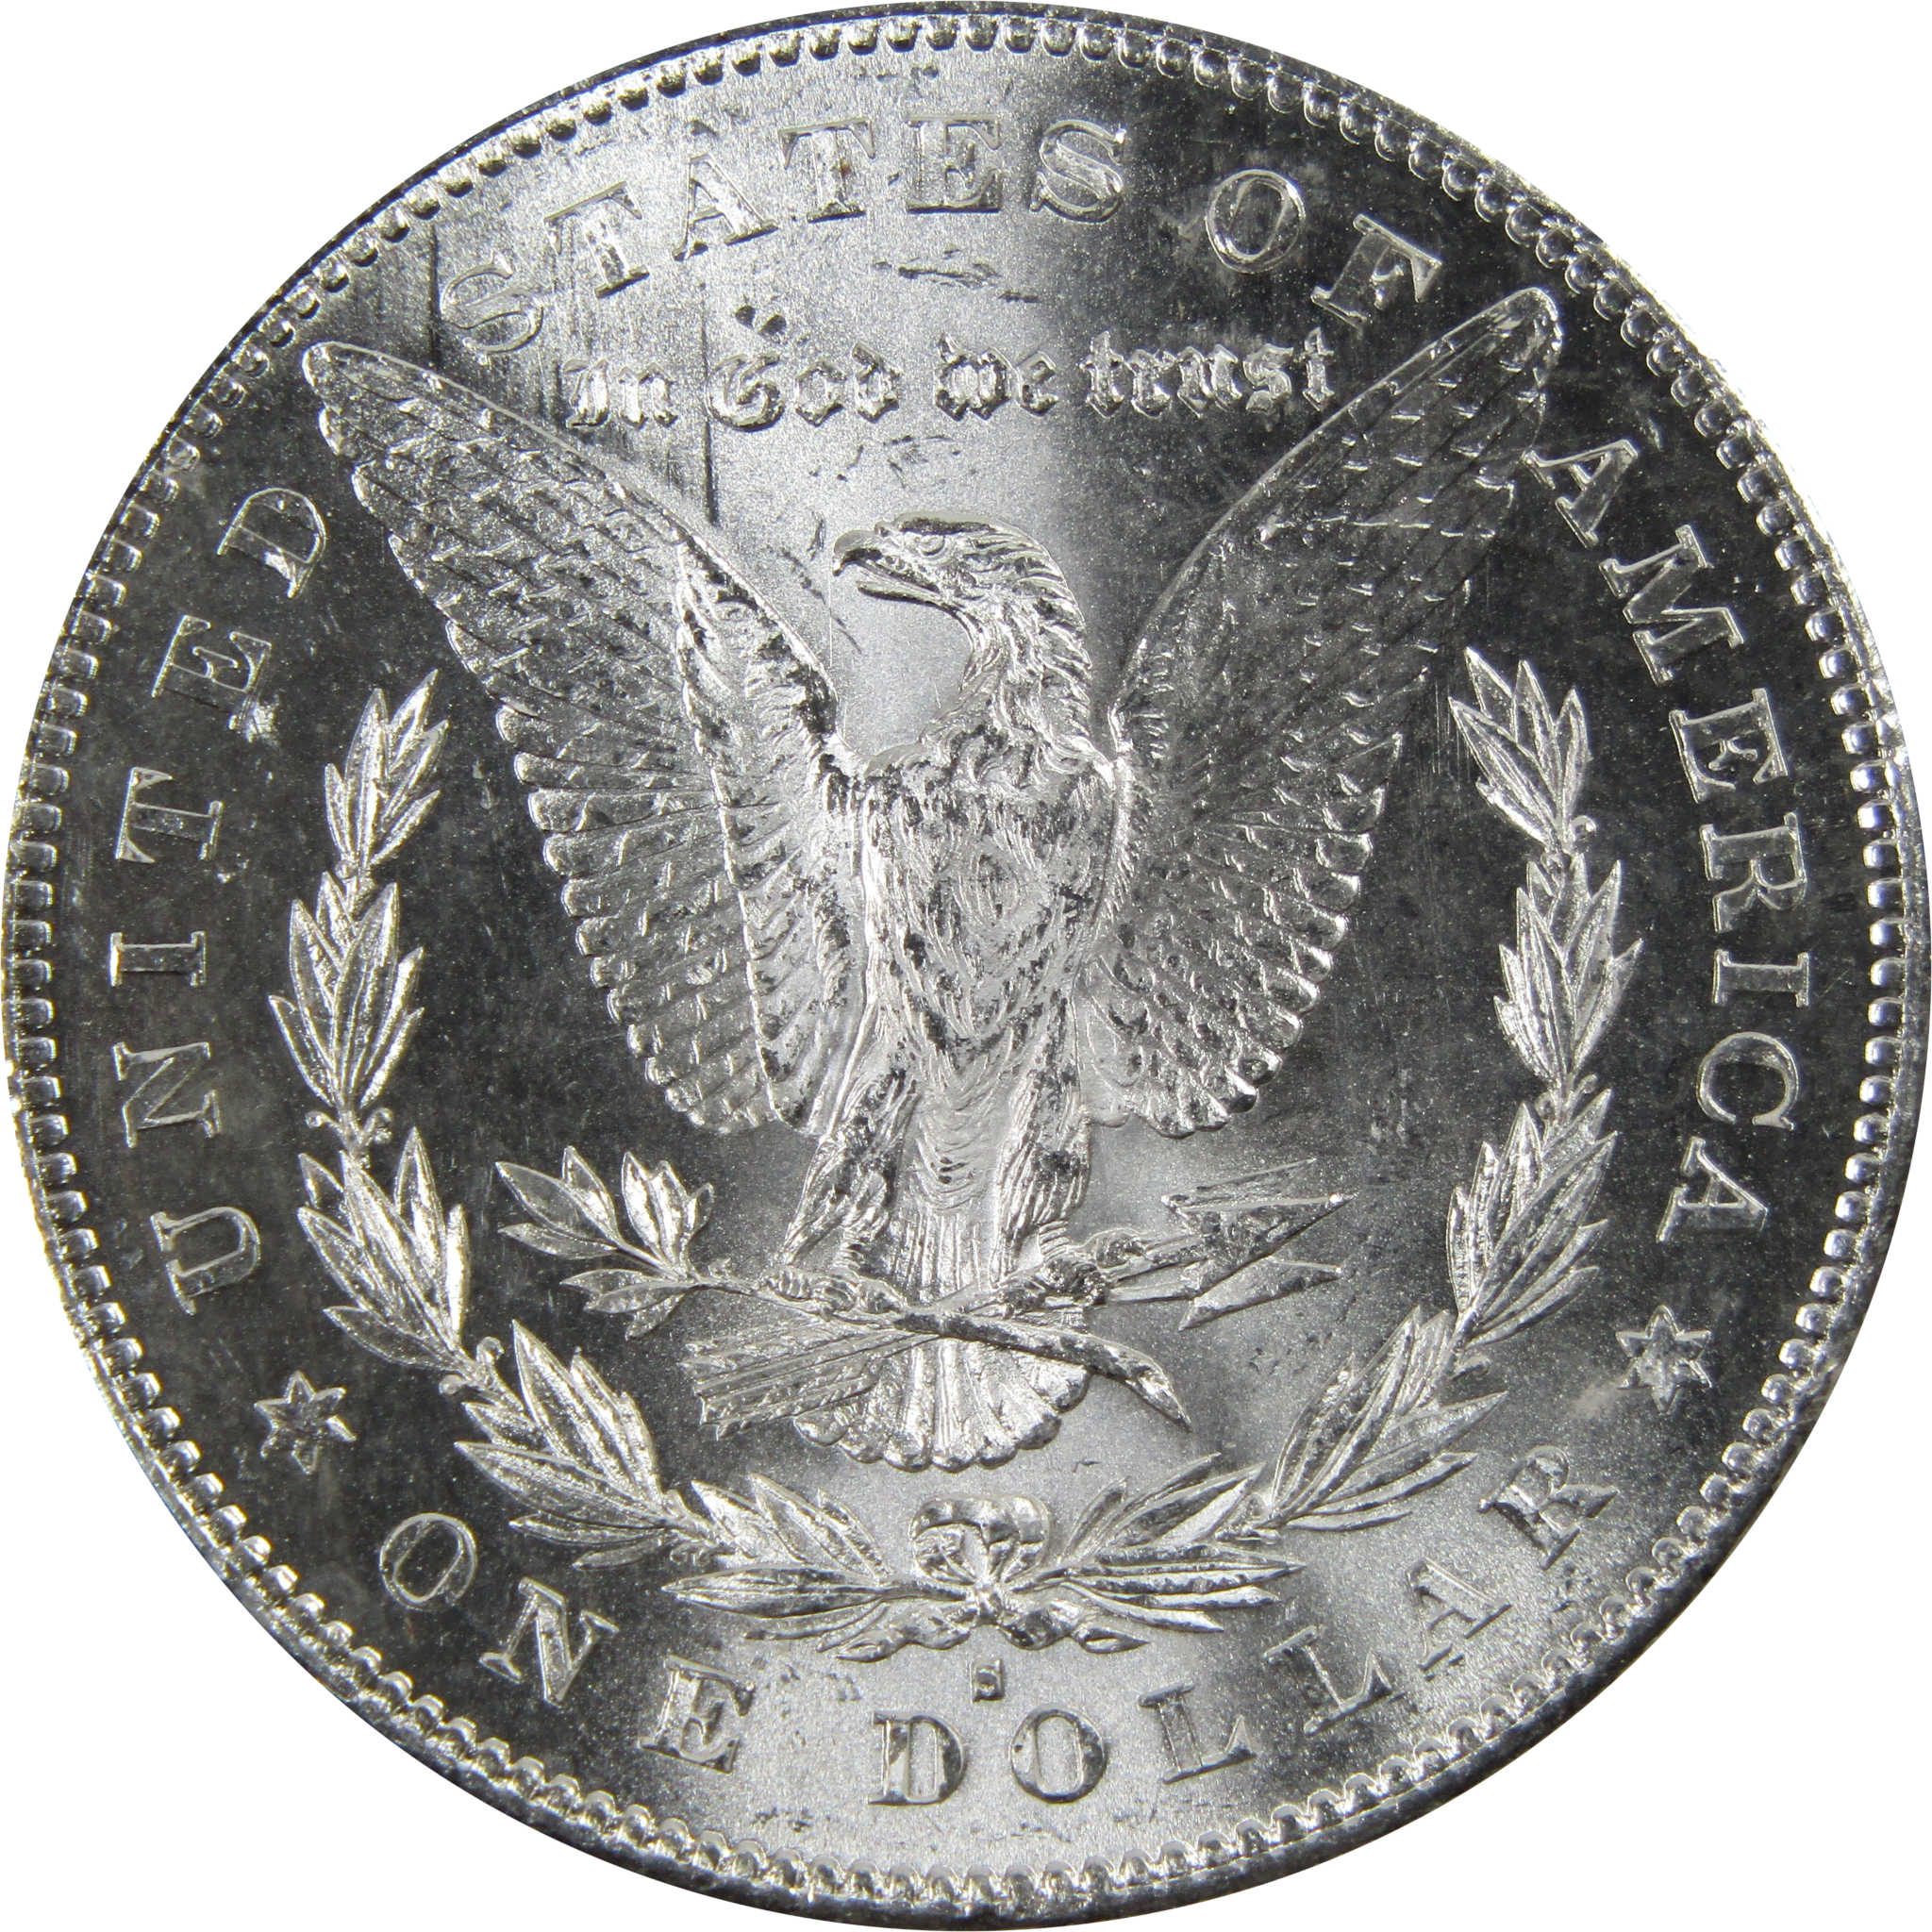 1878 S Morgan Dollar BU Choice Uncirculated 90% Silver $1 SKU:I4792 - Morgan coin - Morgan silver dollar - Morgan silver dollar for sale - Profile Coins &amp; Collectibles